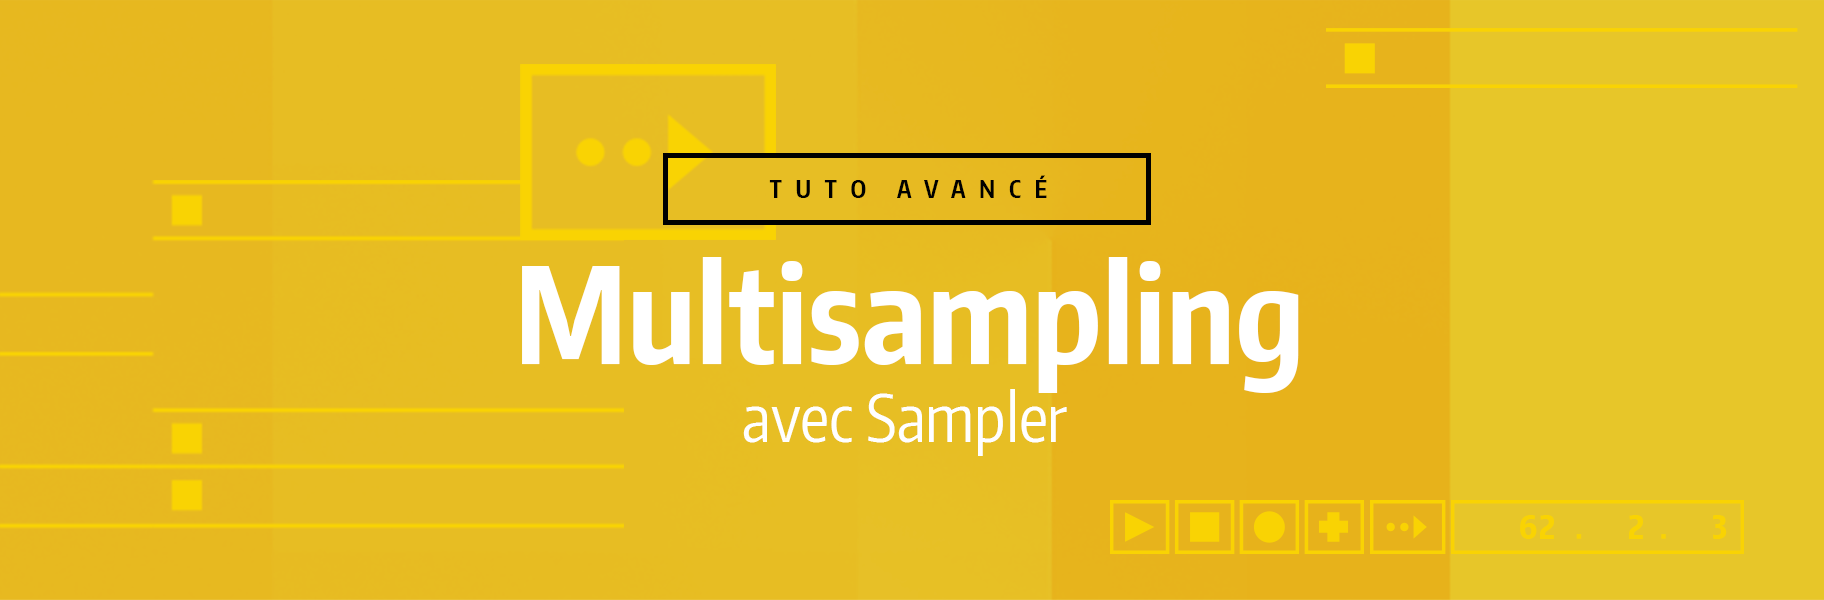 Tutoriel Ableton Live - Multisampling avec Sampler